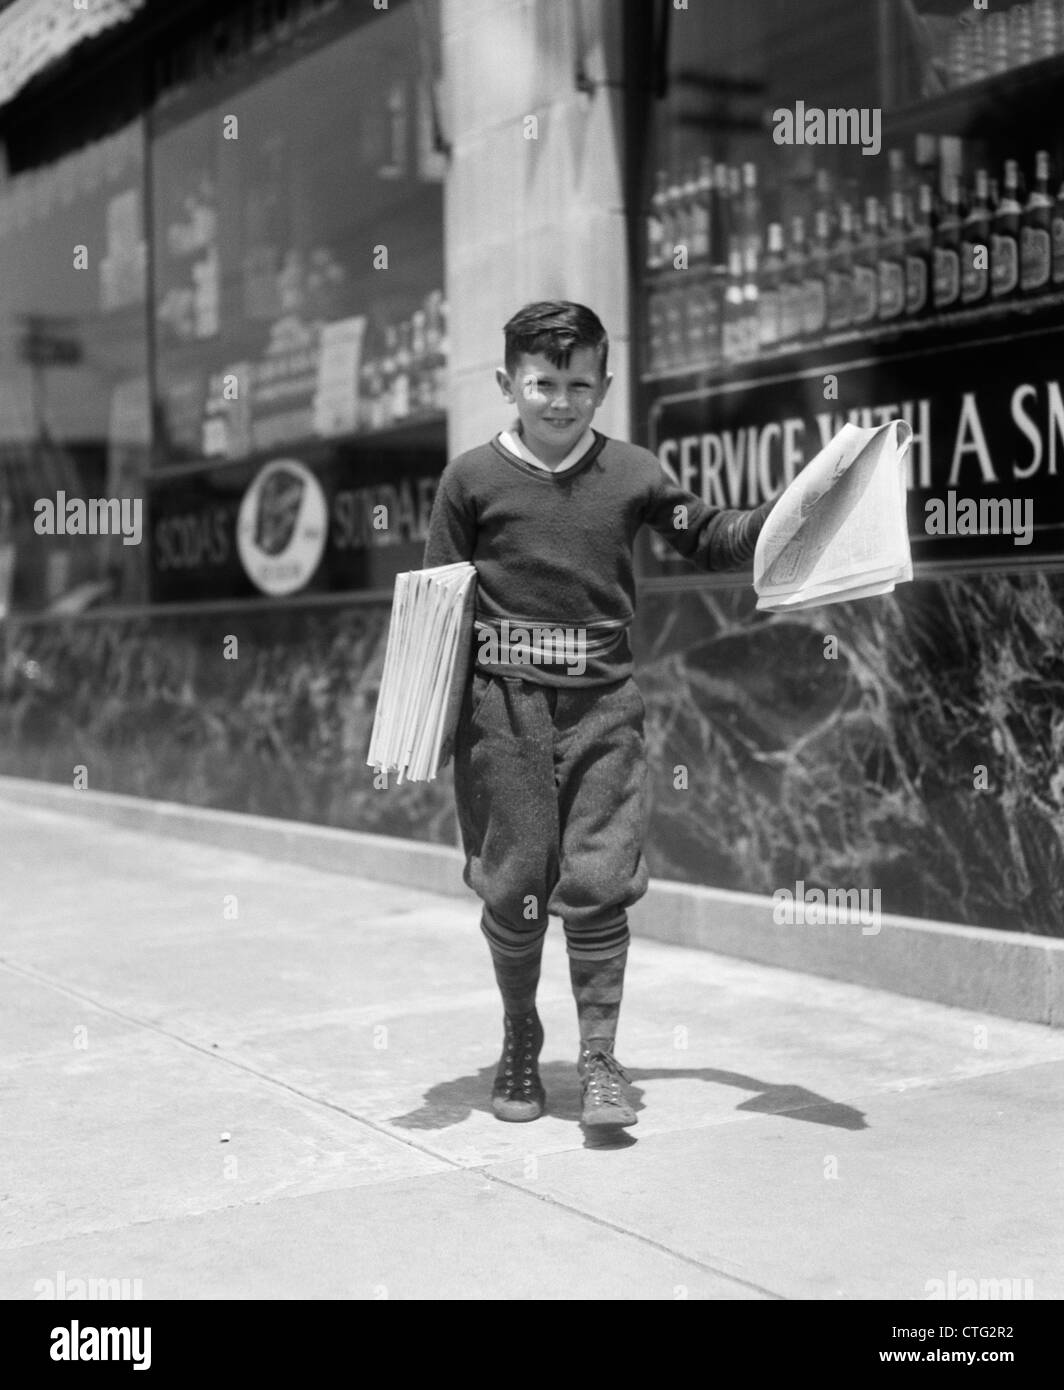 1930s NEWSBOY IN KNICKERS WALKING DOWN STREET HAWKING PAPERS Stock Photo